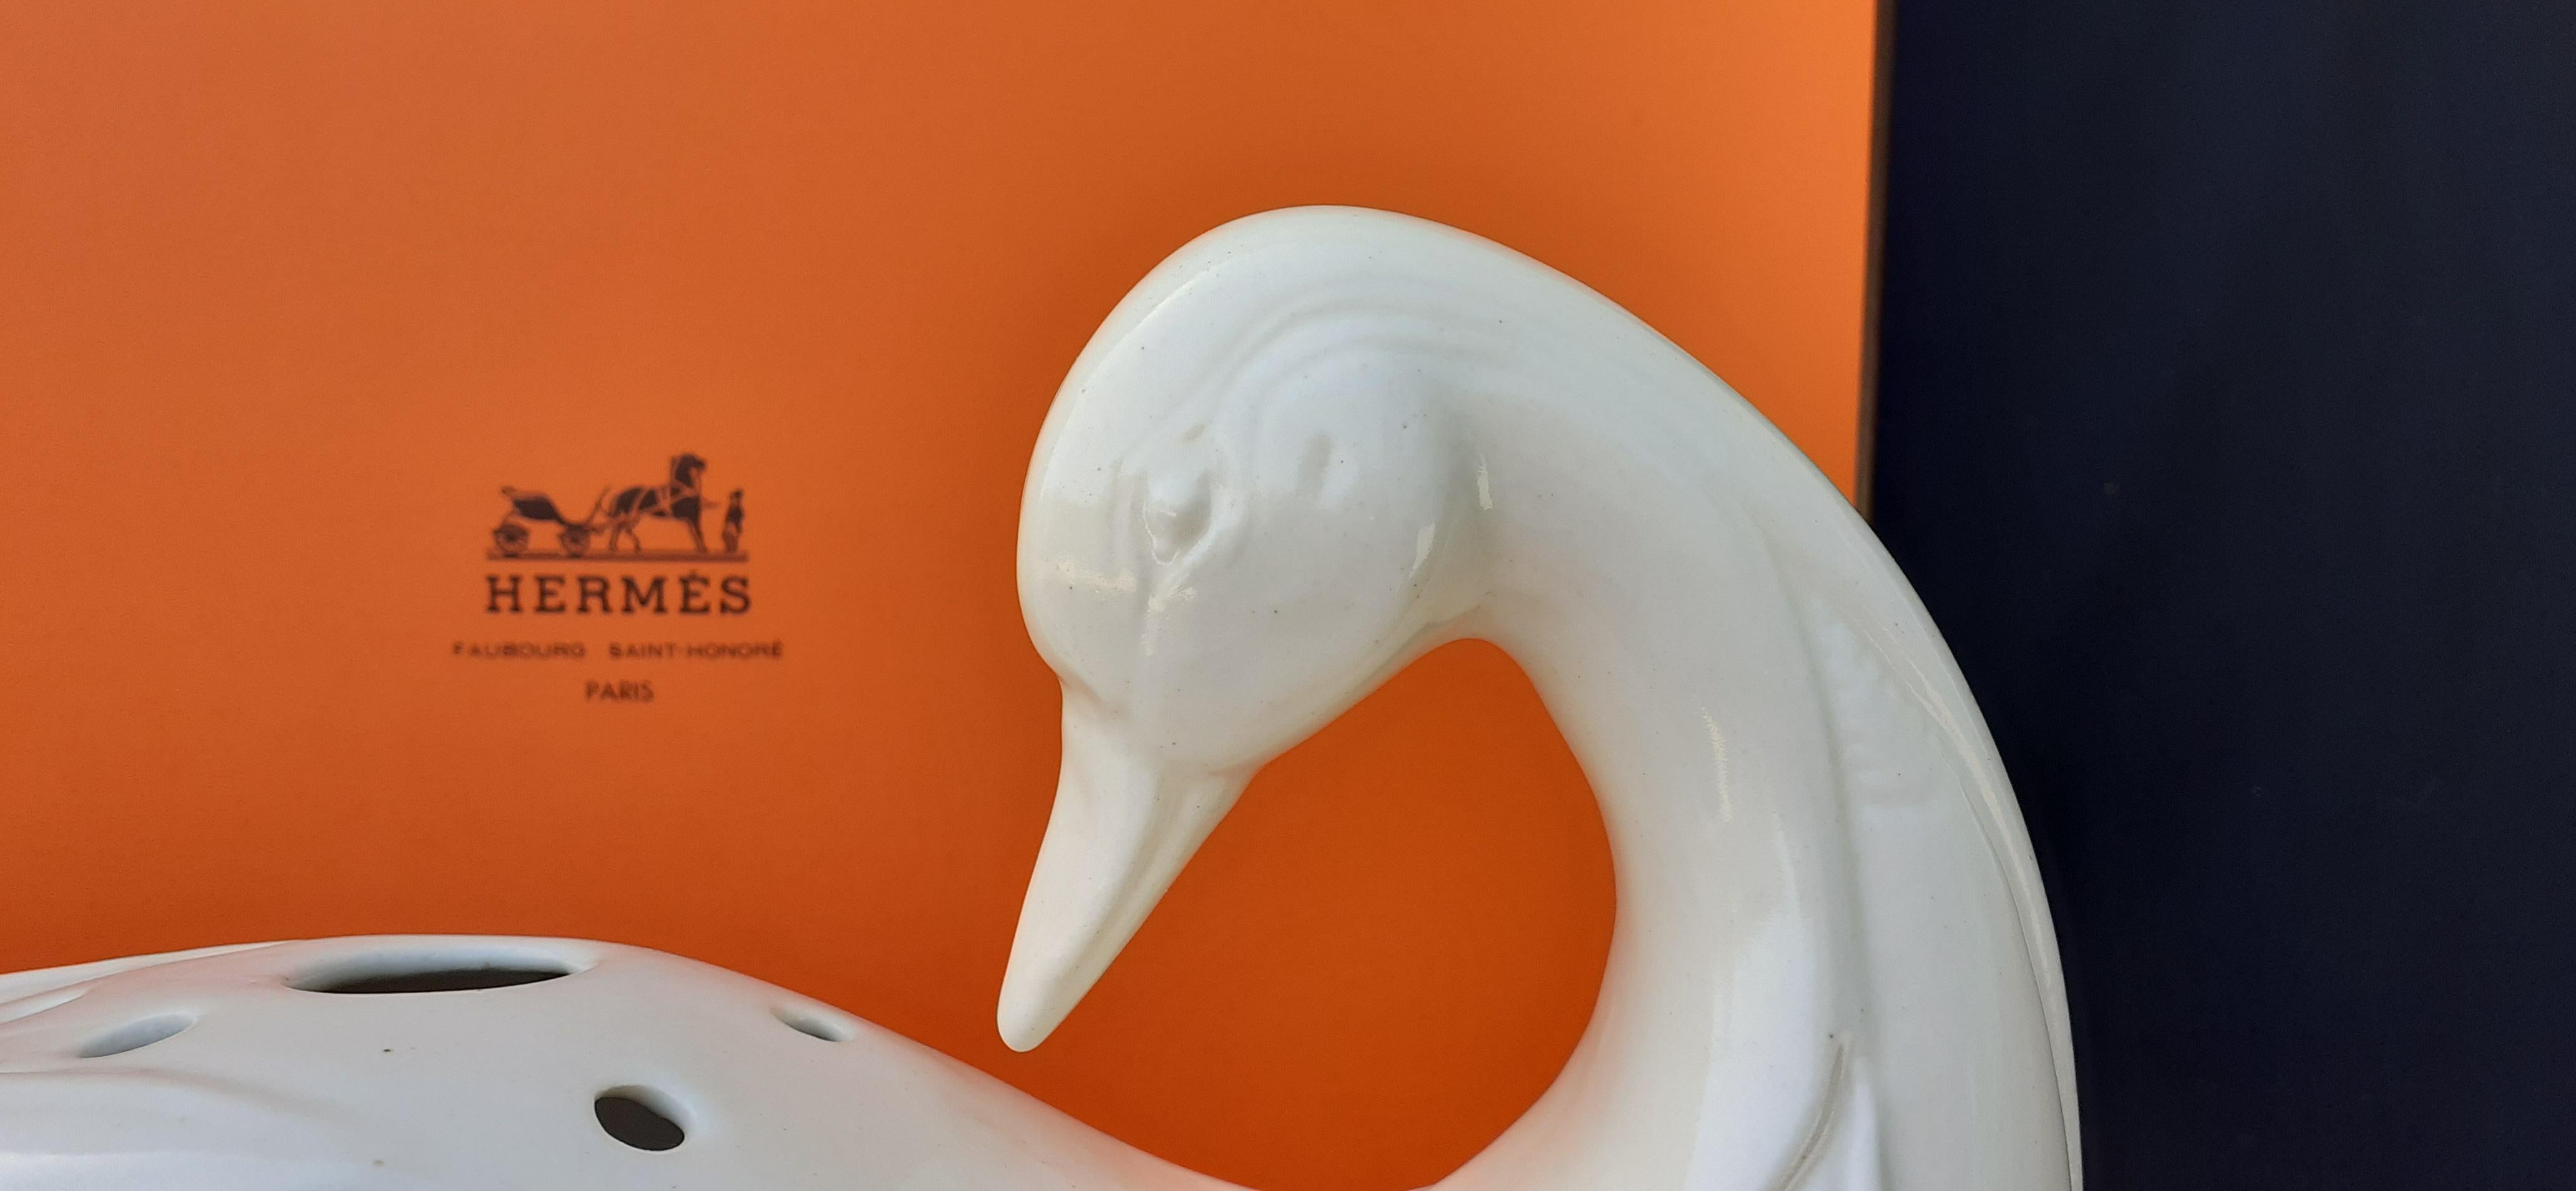 Exceptional Hermès Centerpiece Vase Ceramic Duck From La Mare aux Canards RARE For Sale 3